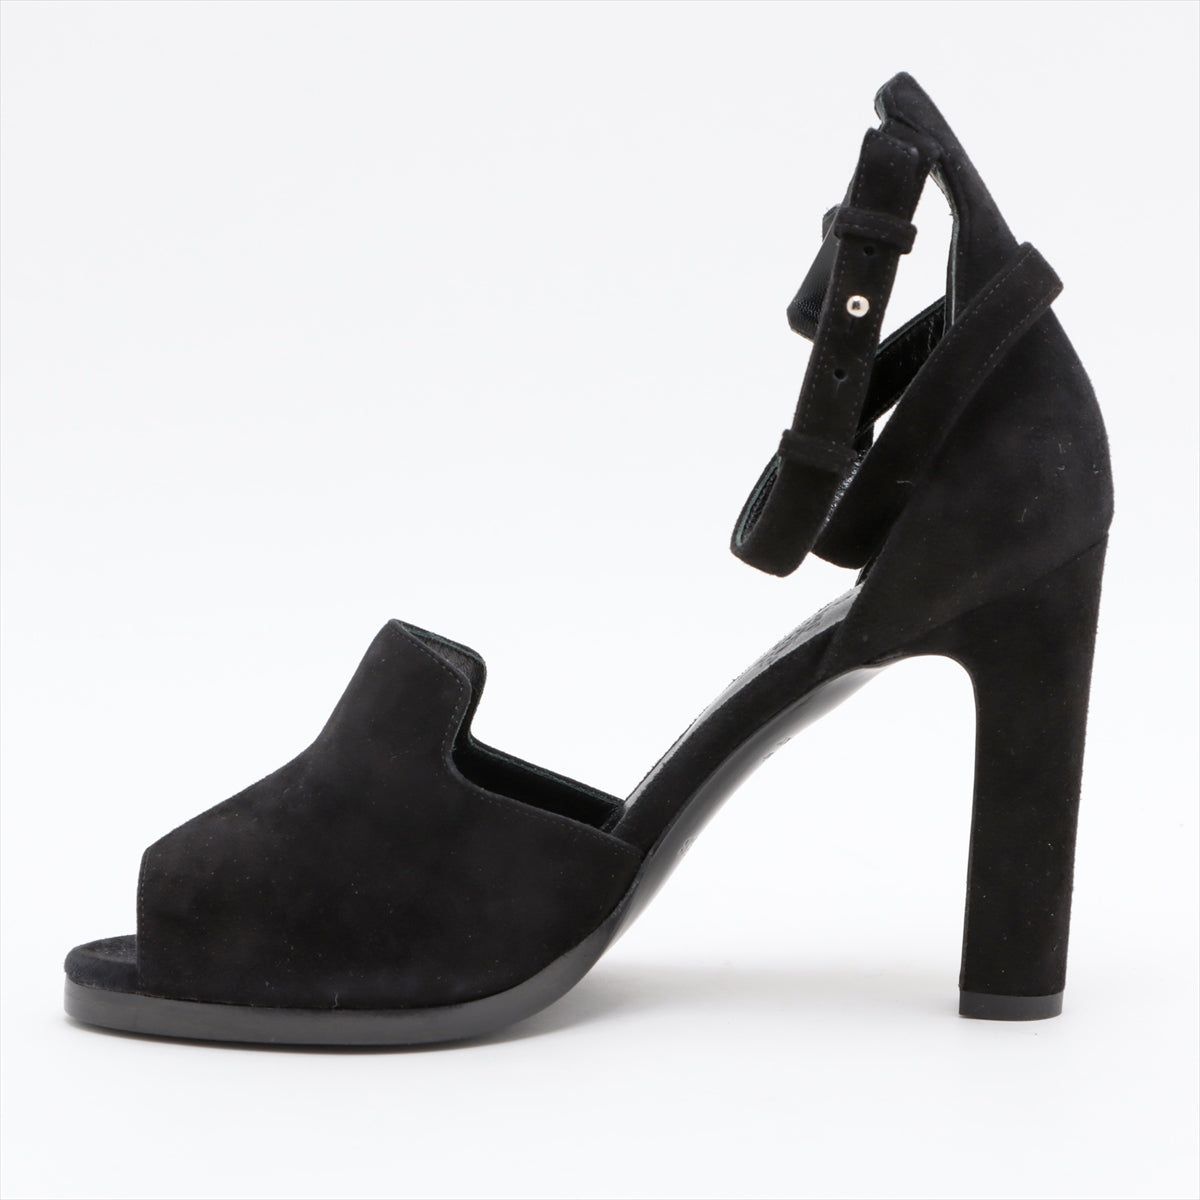 Hermès Suede leather Sandals 37 1/2 Ladies' Black Kelly metal fittings There is a bag